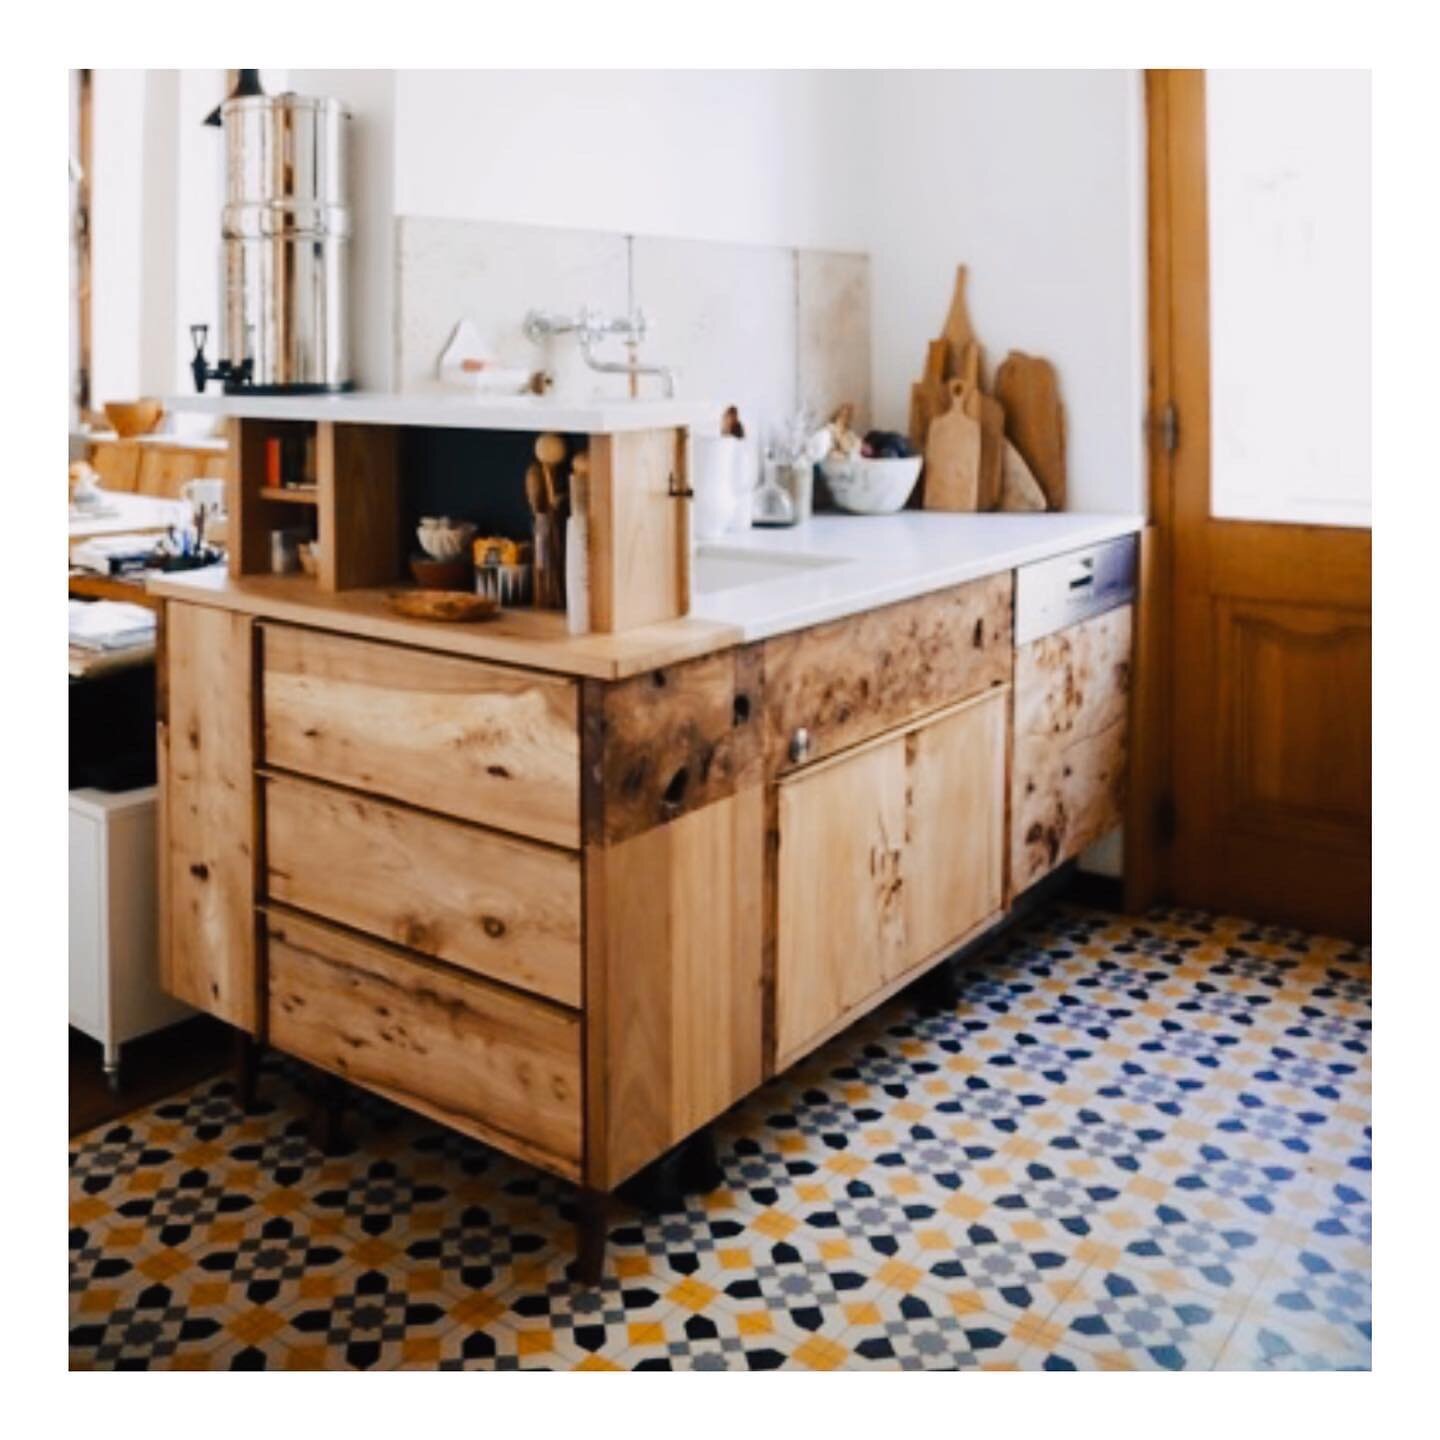 The wooden kitchen @charlottehuguet @sycomoretree 

Pic by #stephanief&uuml;ssenich 

#kitcheninspiration #kitchendesign #woodenhouse #woodenkitchen #countrykitchen #countrydecor #countryfication